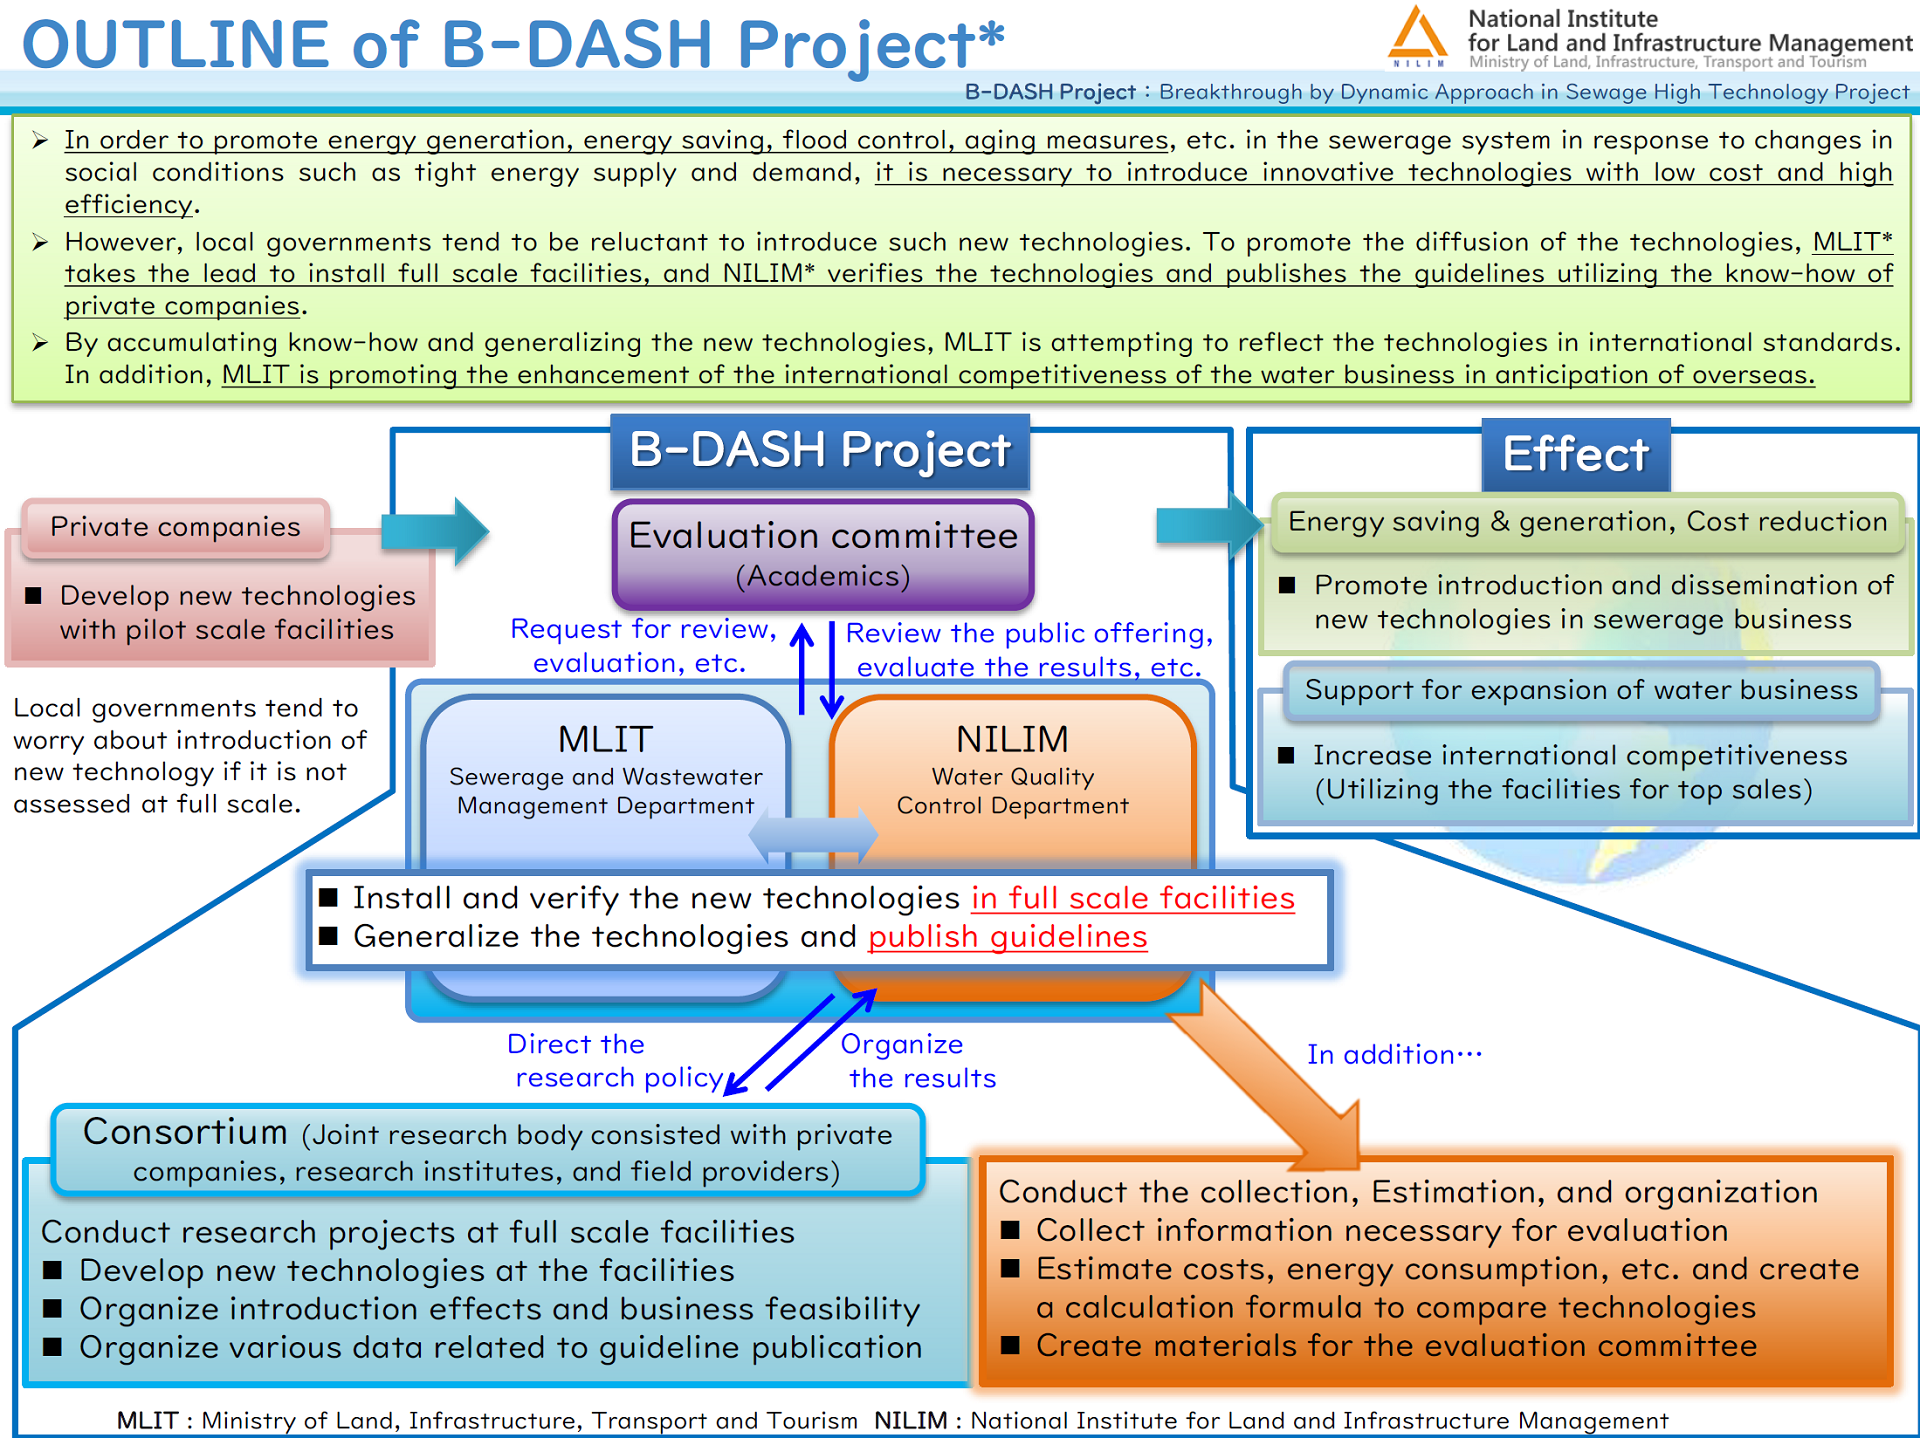 Purpose of B-DASH Project